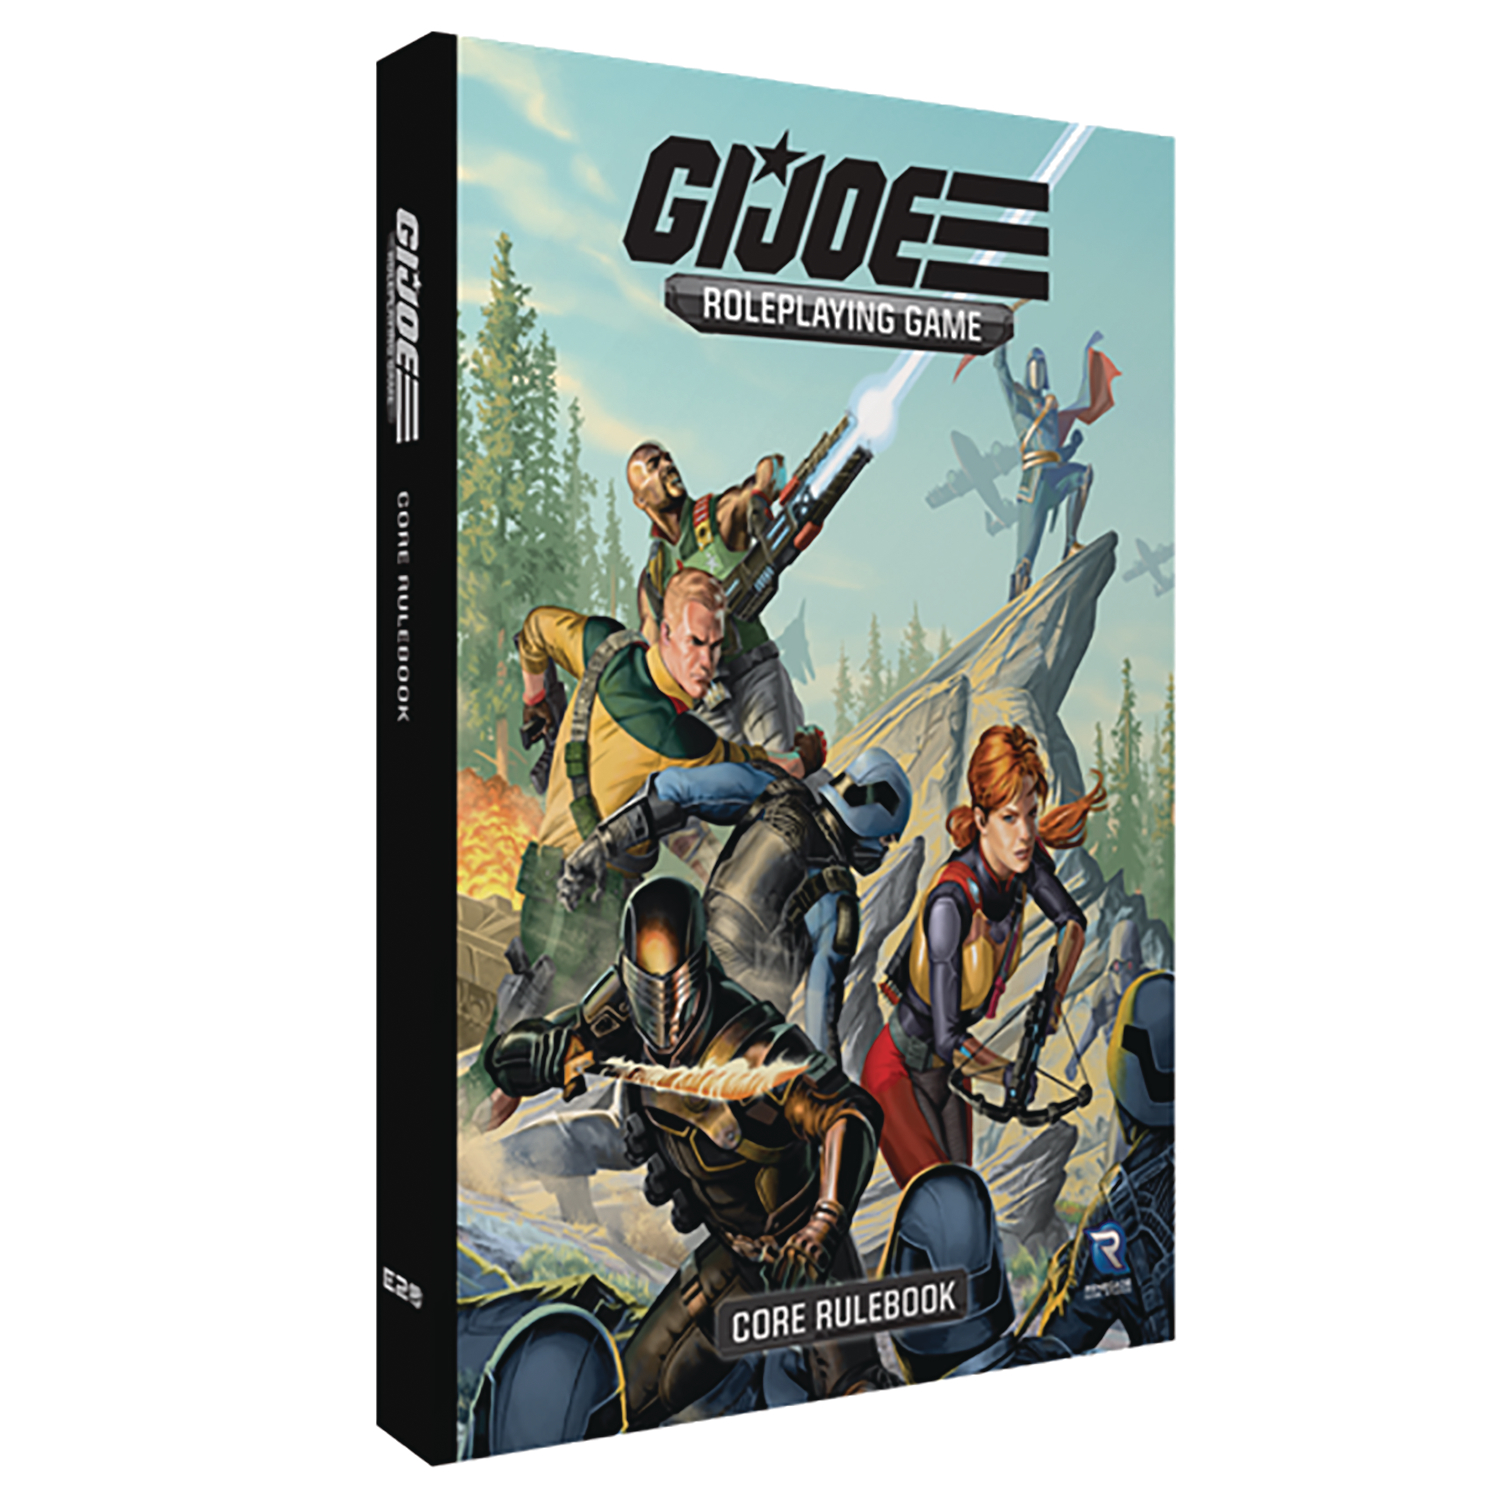 GI Joe RPG Core Sourcebook Hardcover